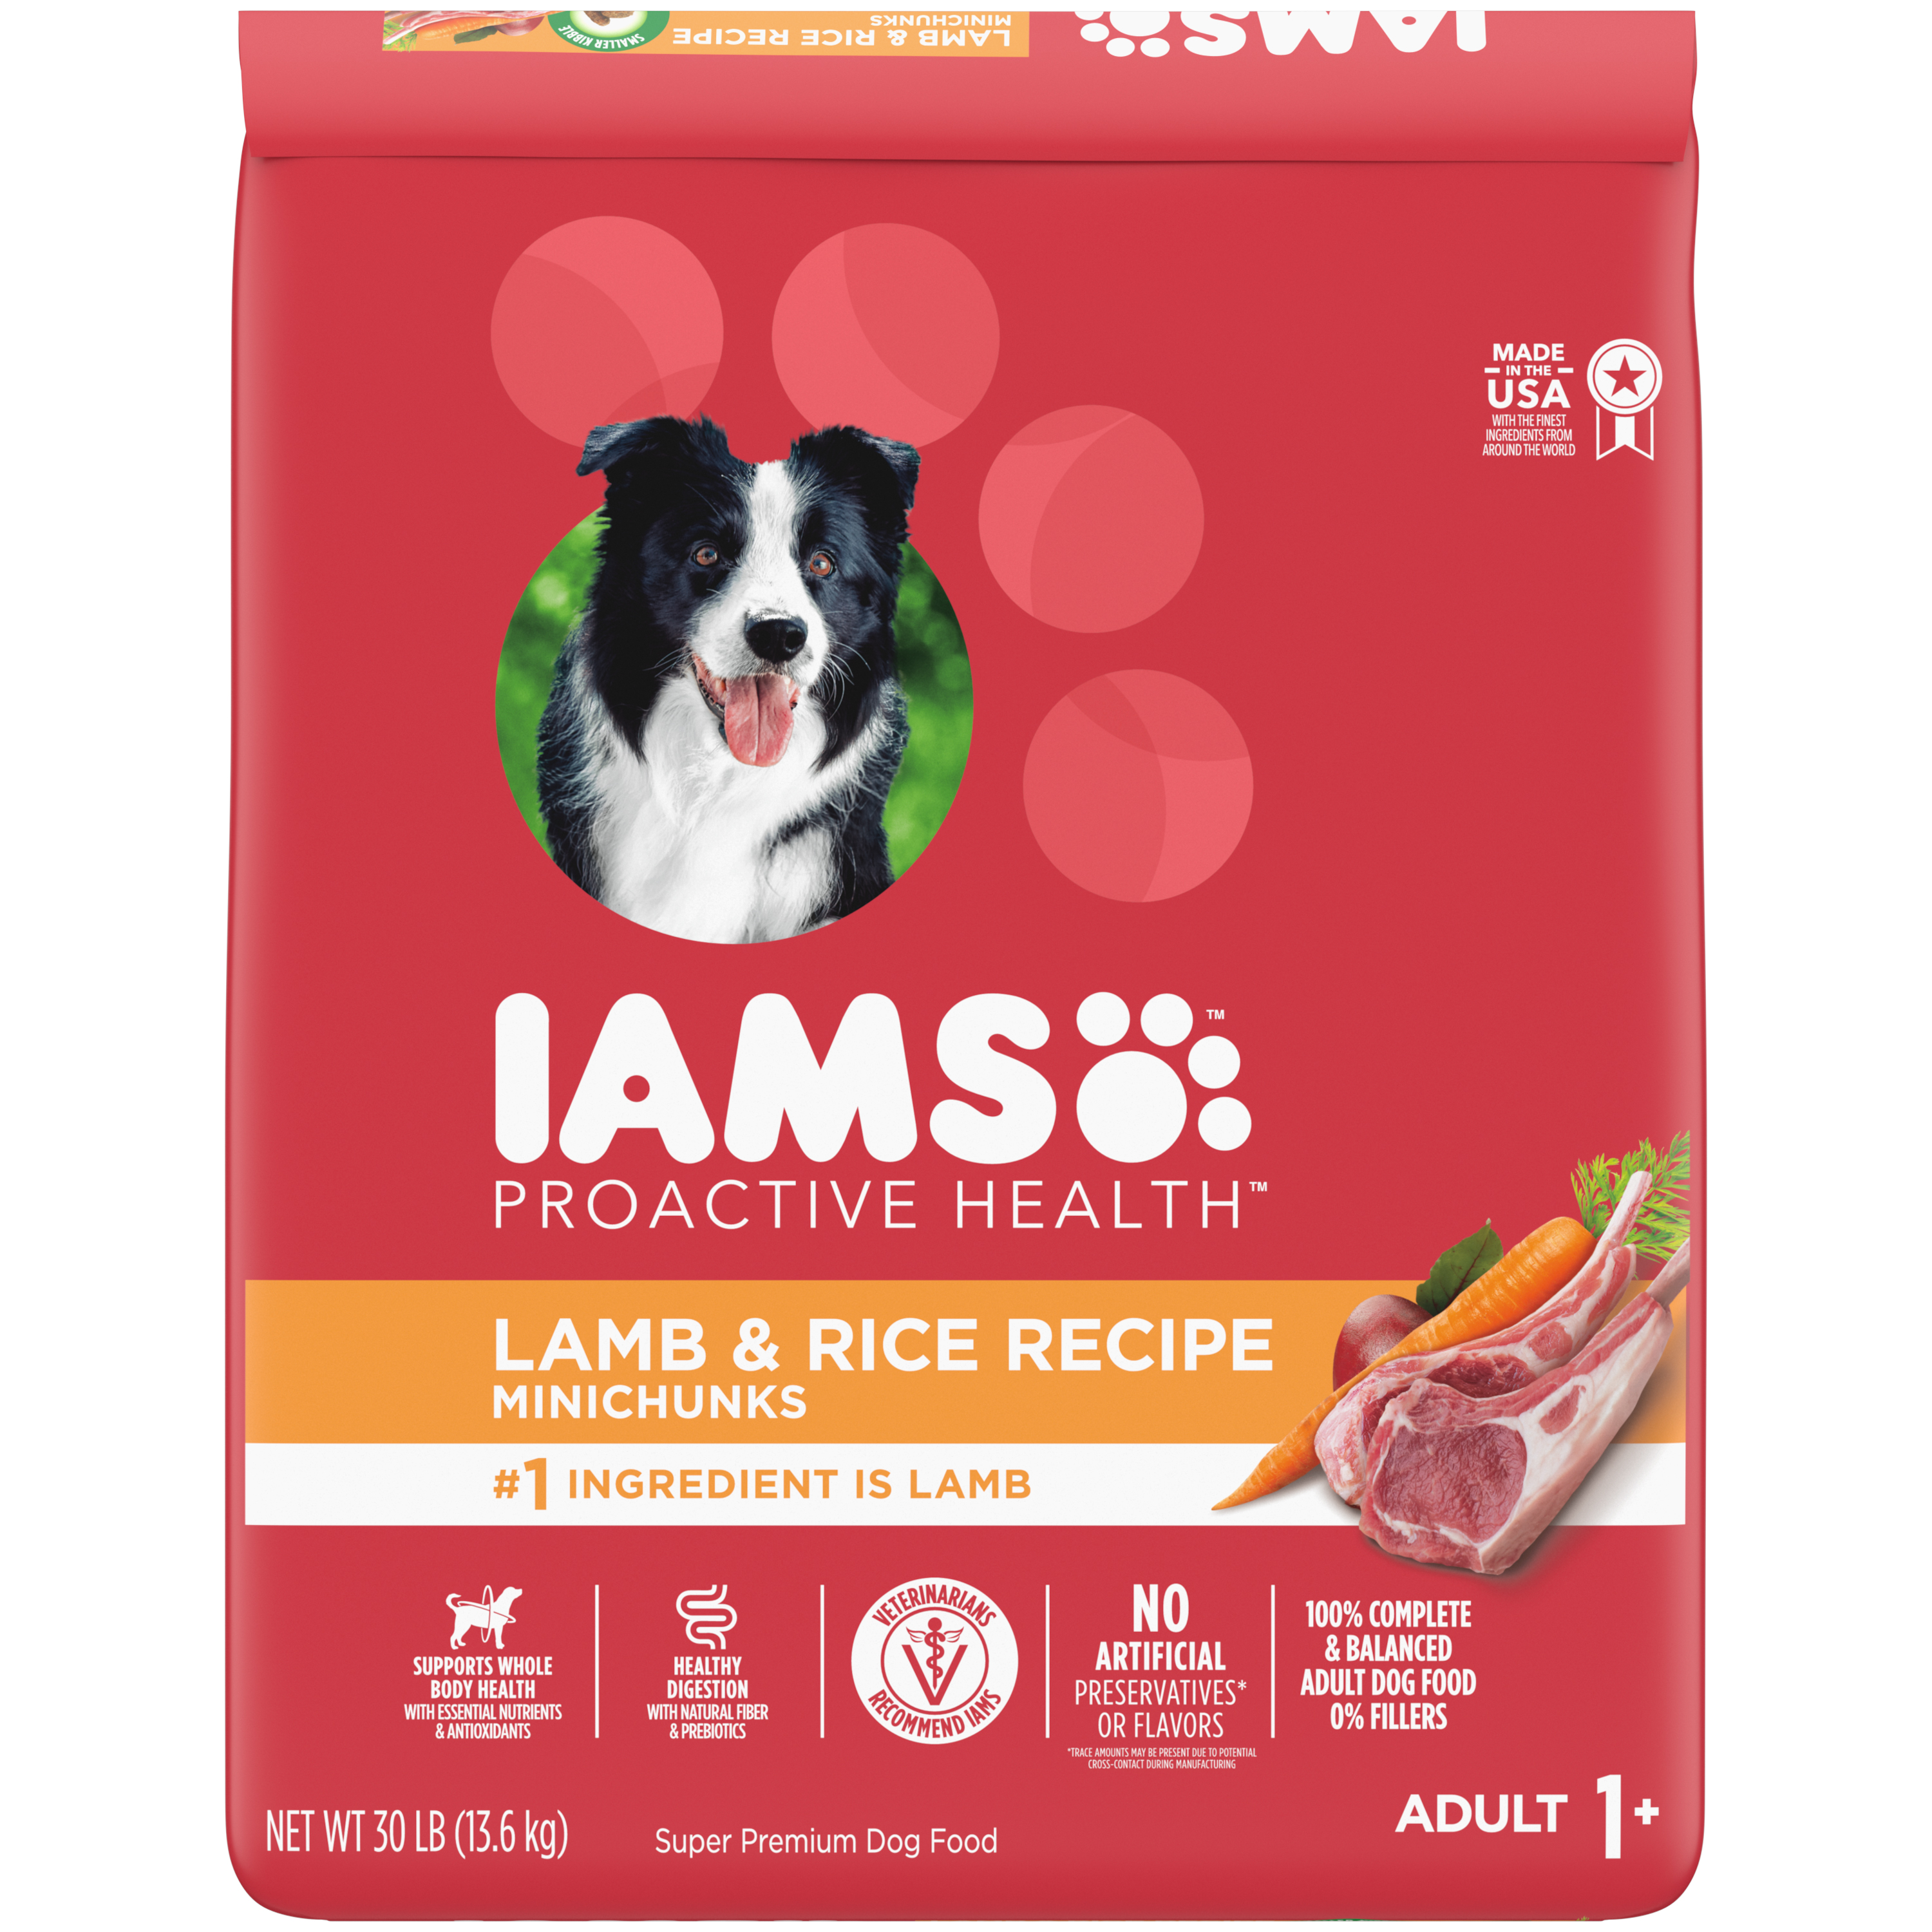 30 Lb Iams Lamb & Rice - Health/First Aid